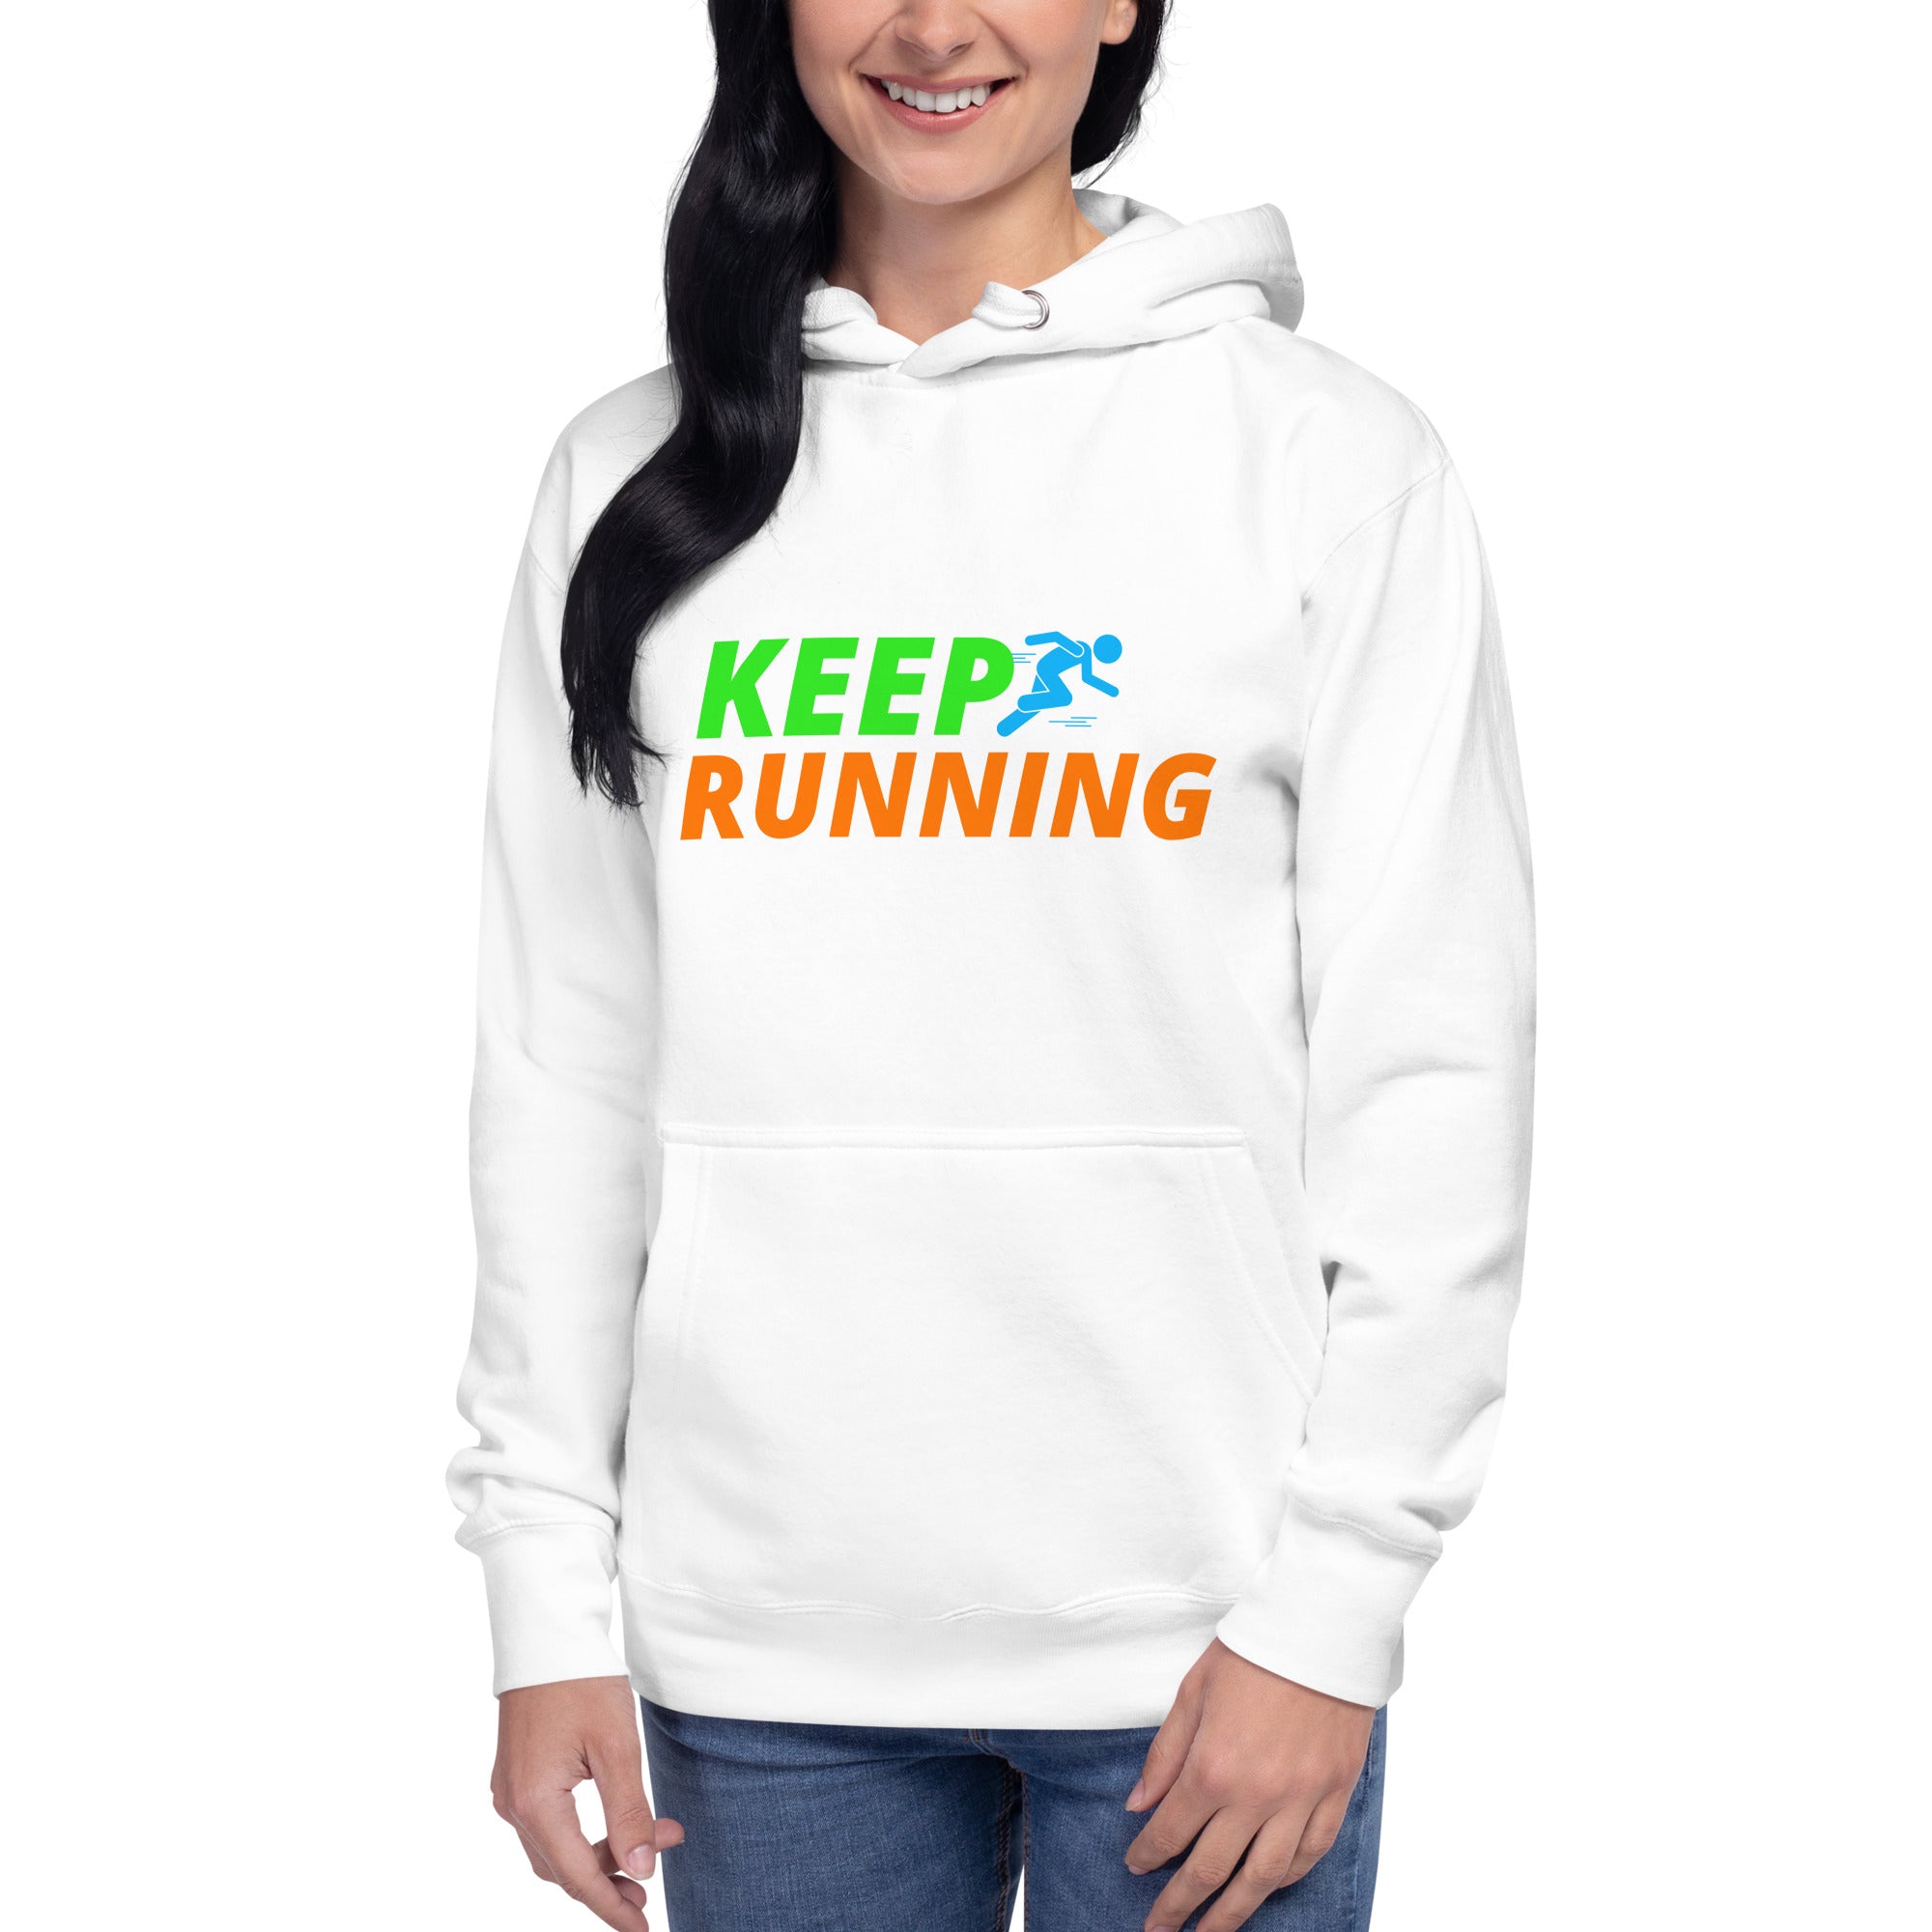 Keep Running Women's Heavy Hoodie